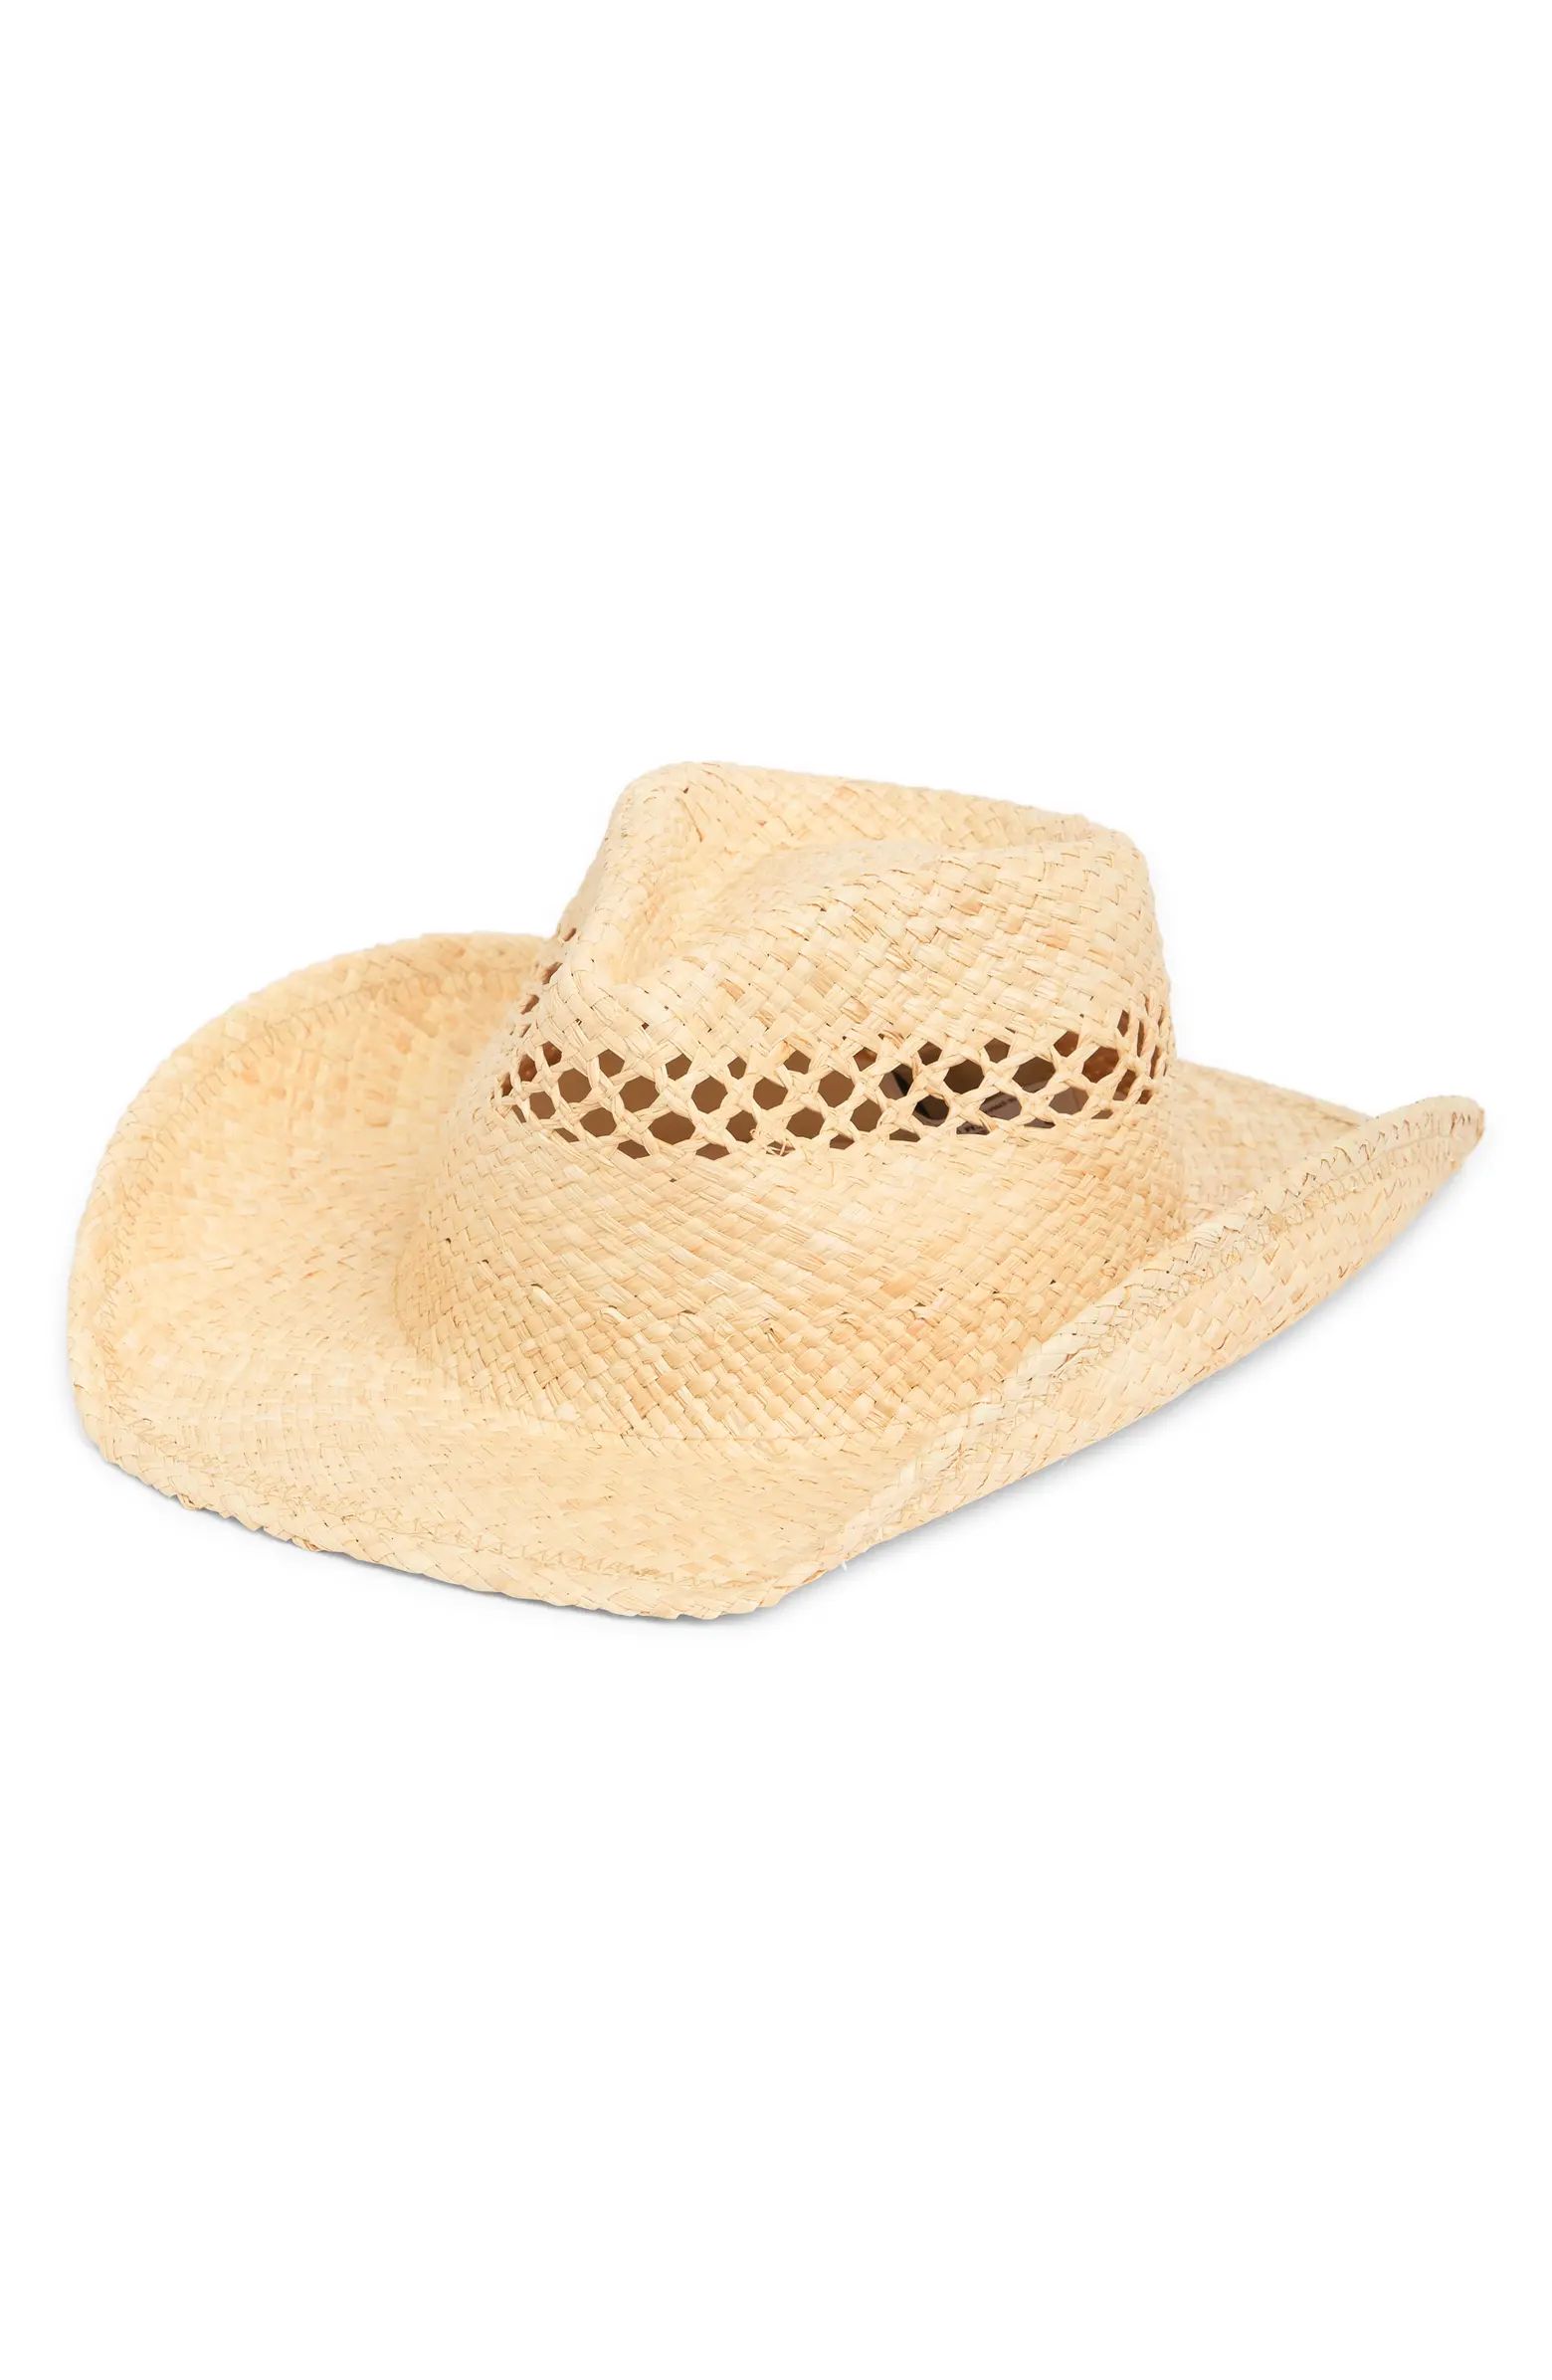 The Desert Cowboy Hat | Nordstrom